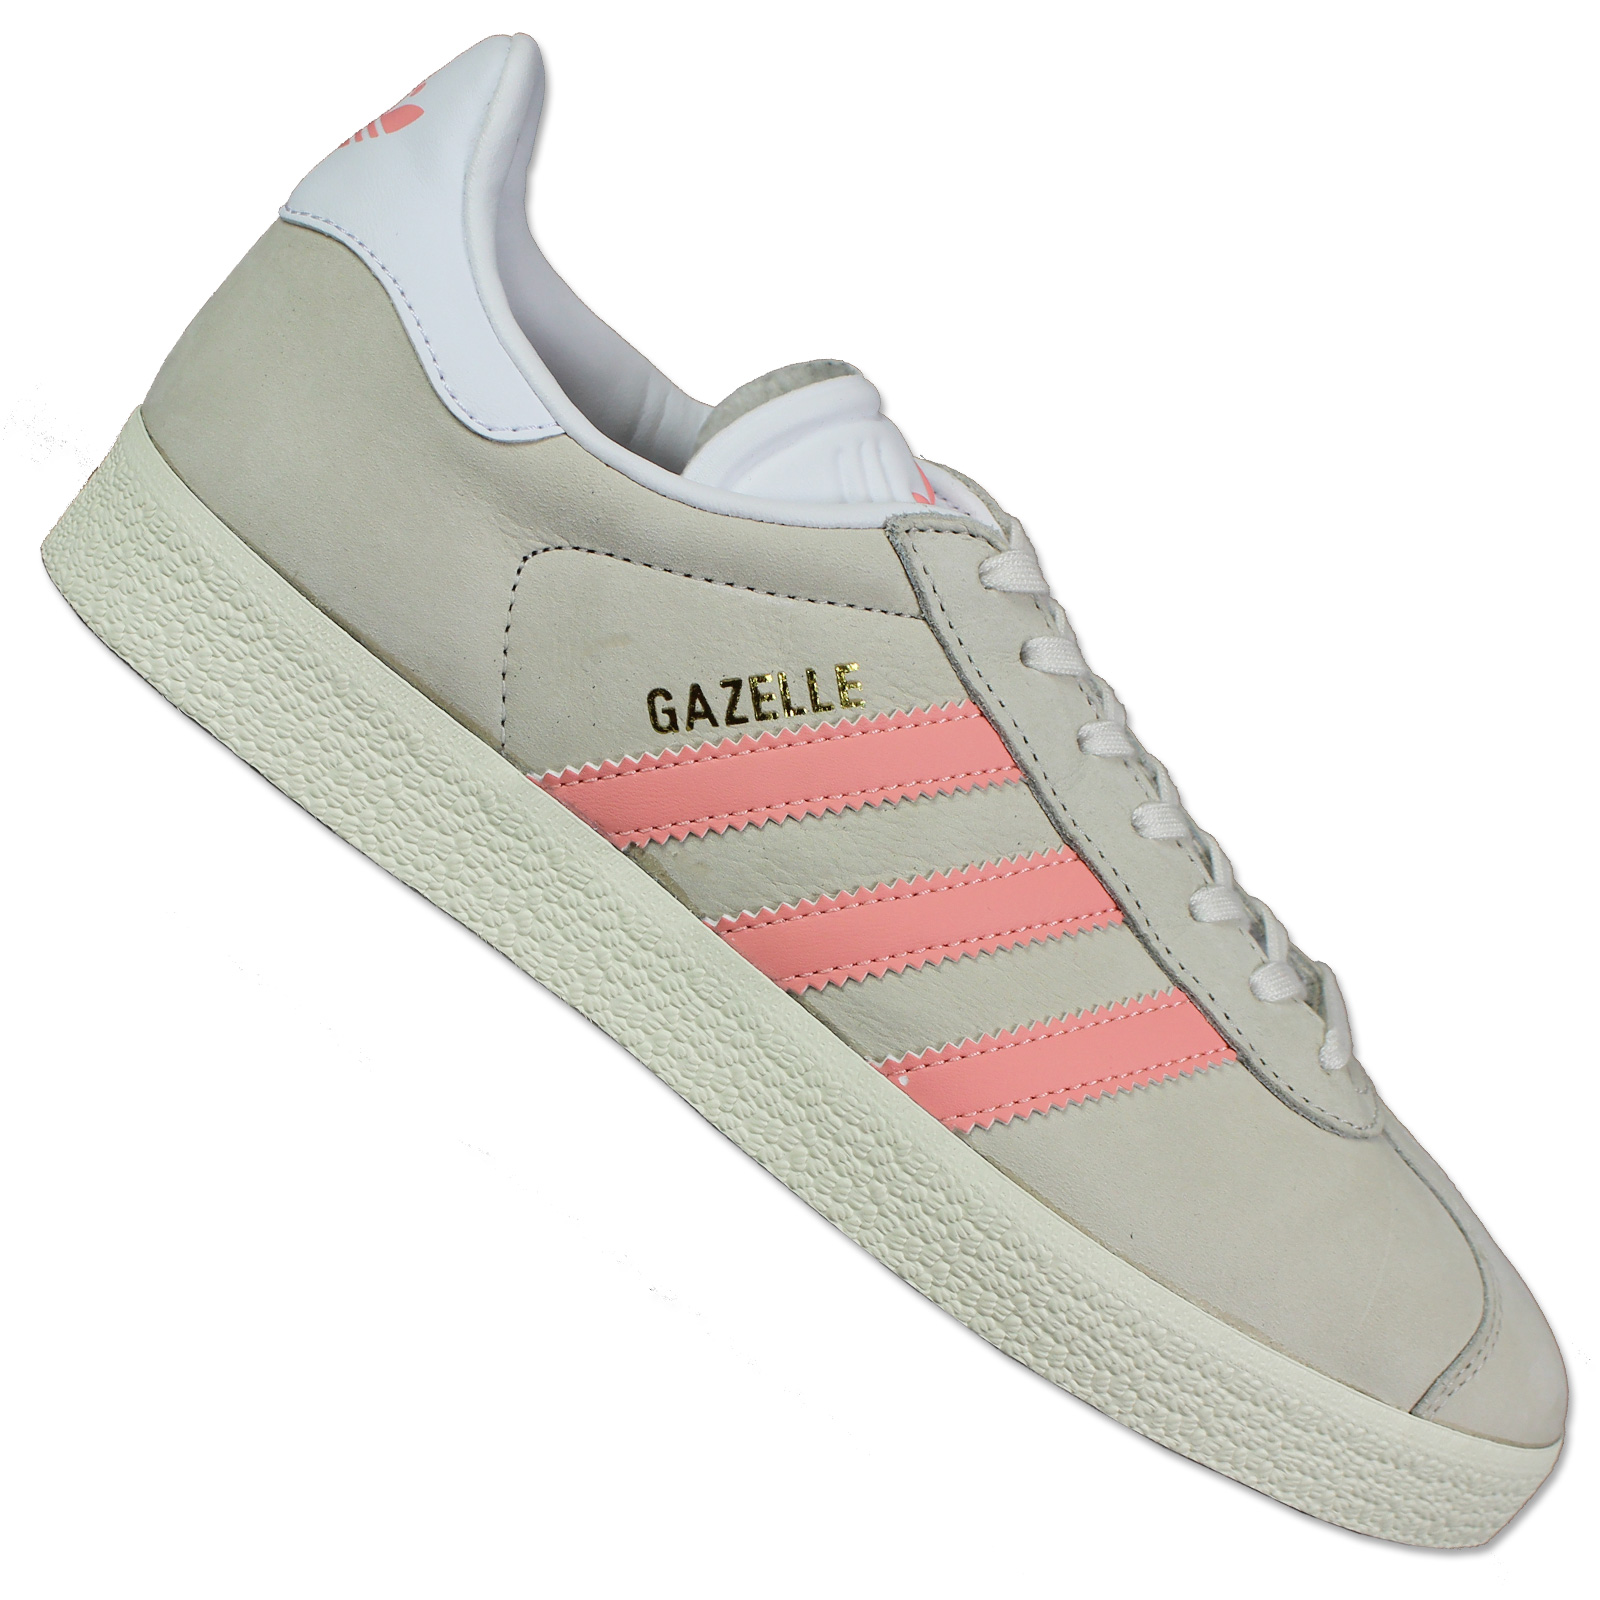 Adidas Originals Gazelle Sneakers Casual Shoes Chalk White Ecru White Pink  | eBay